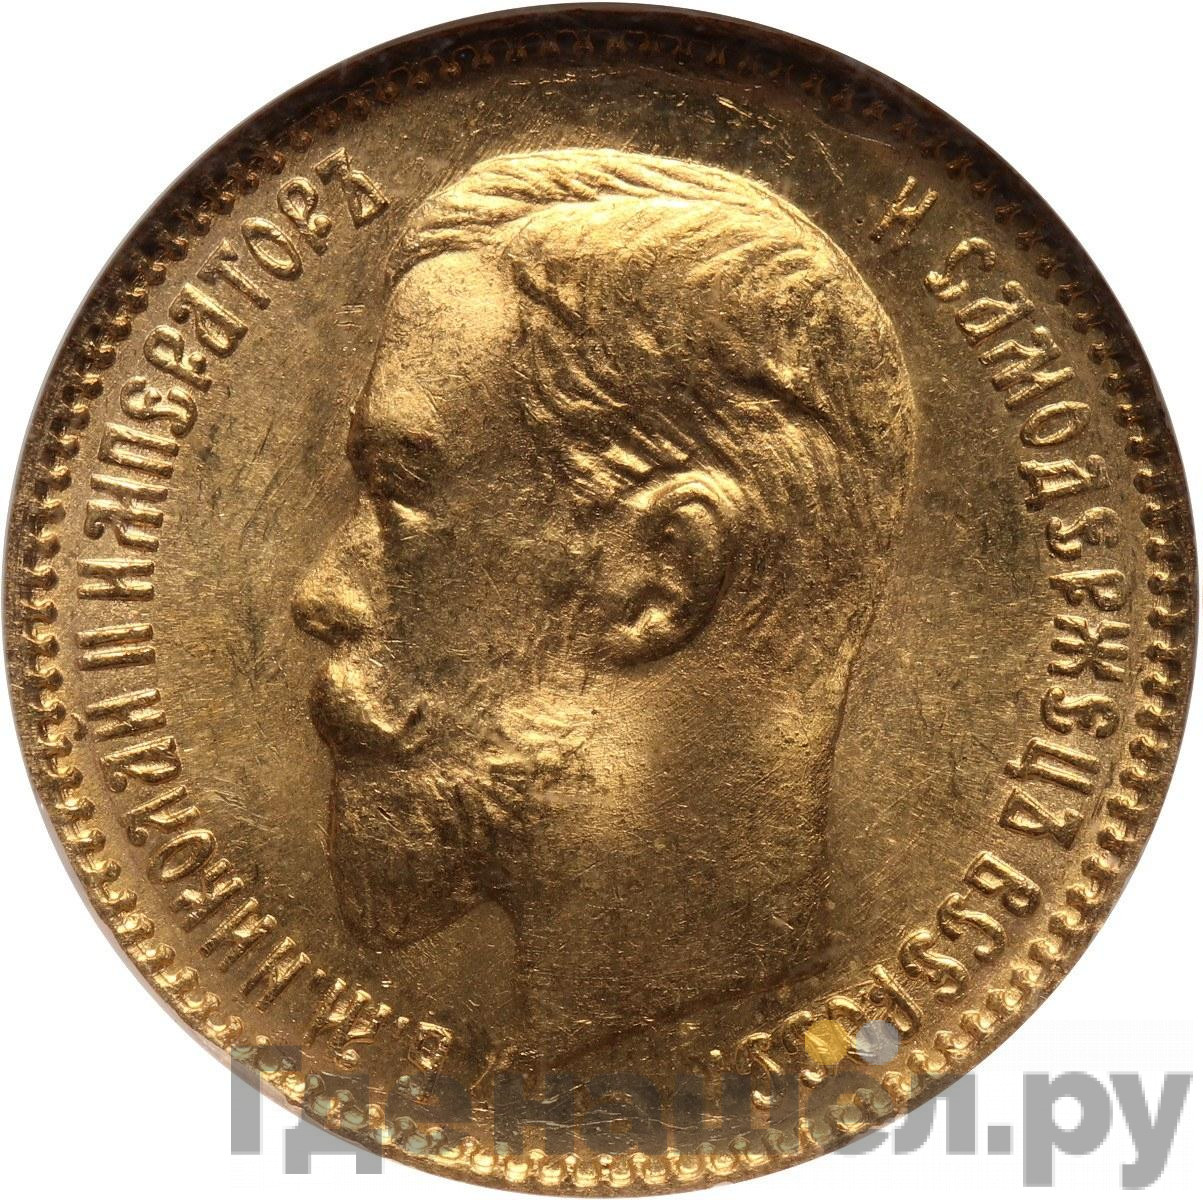 5 рублей 1903 года АР